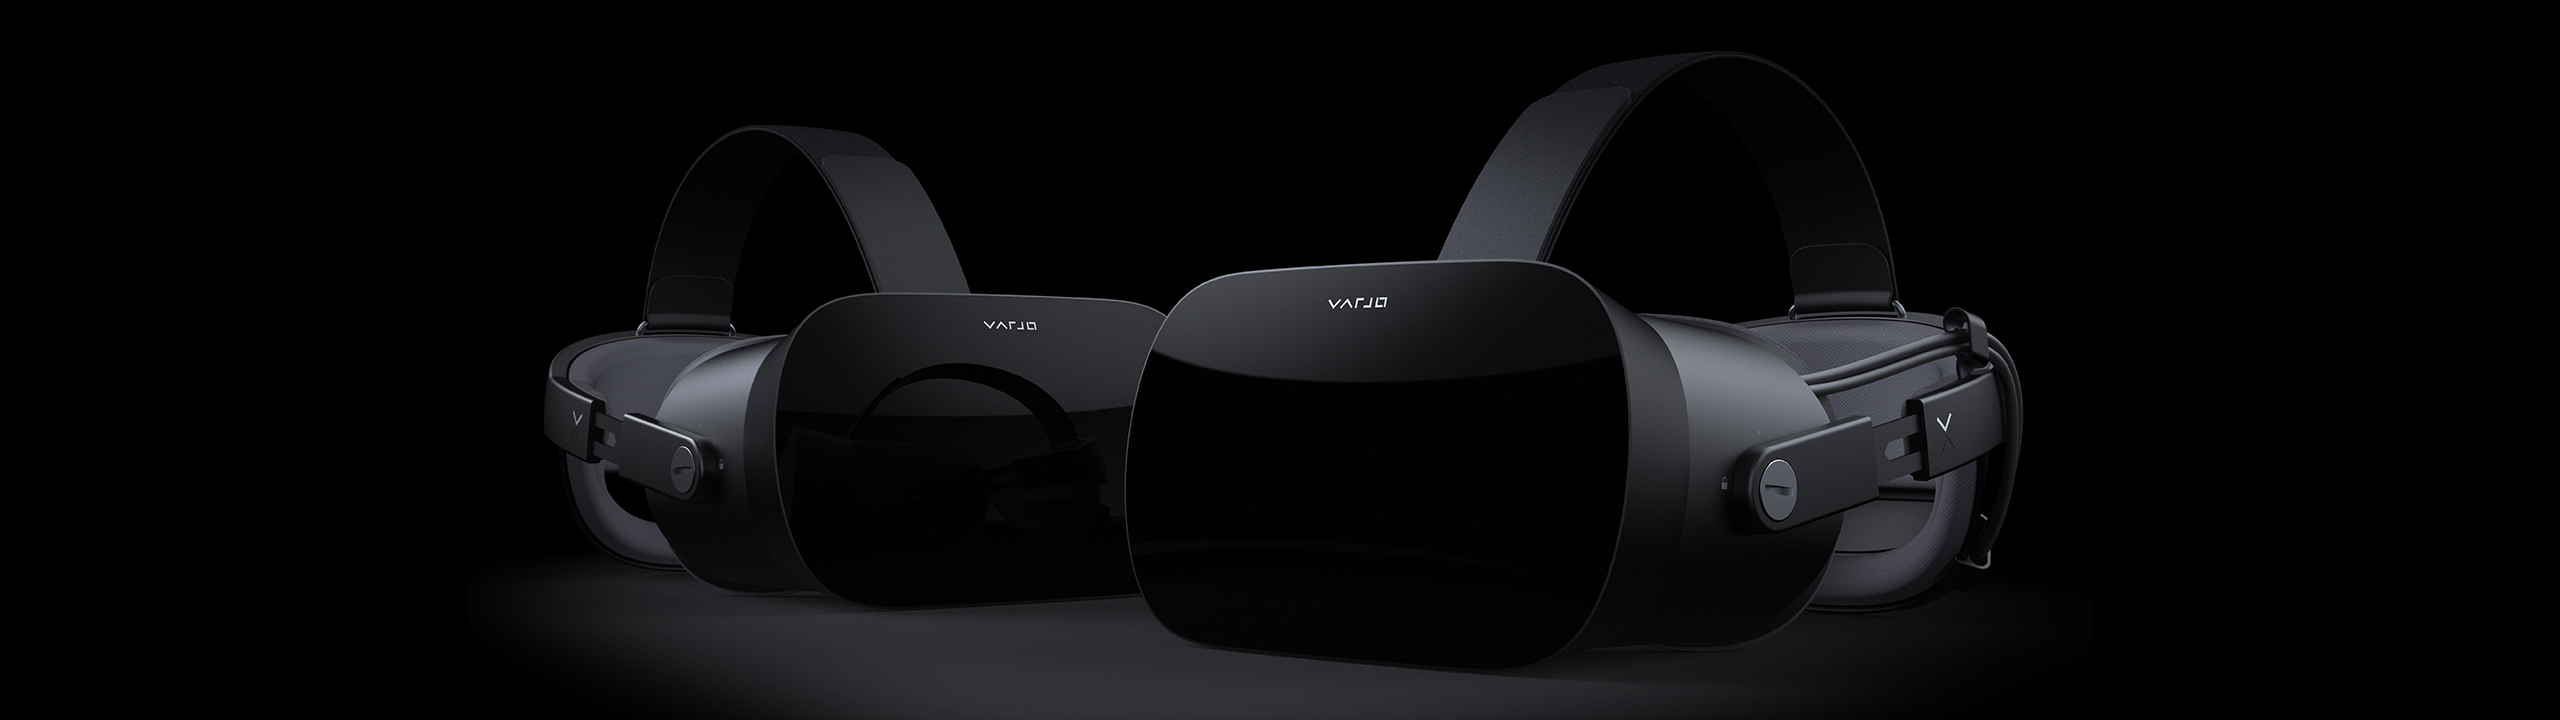 KeyVR Support for New Varjo VR-2 Headsets